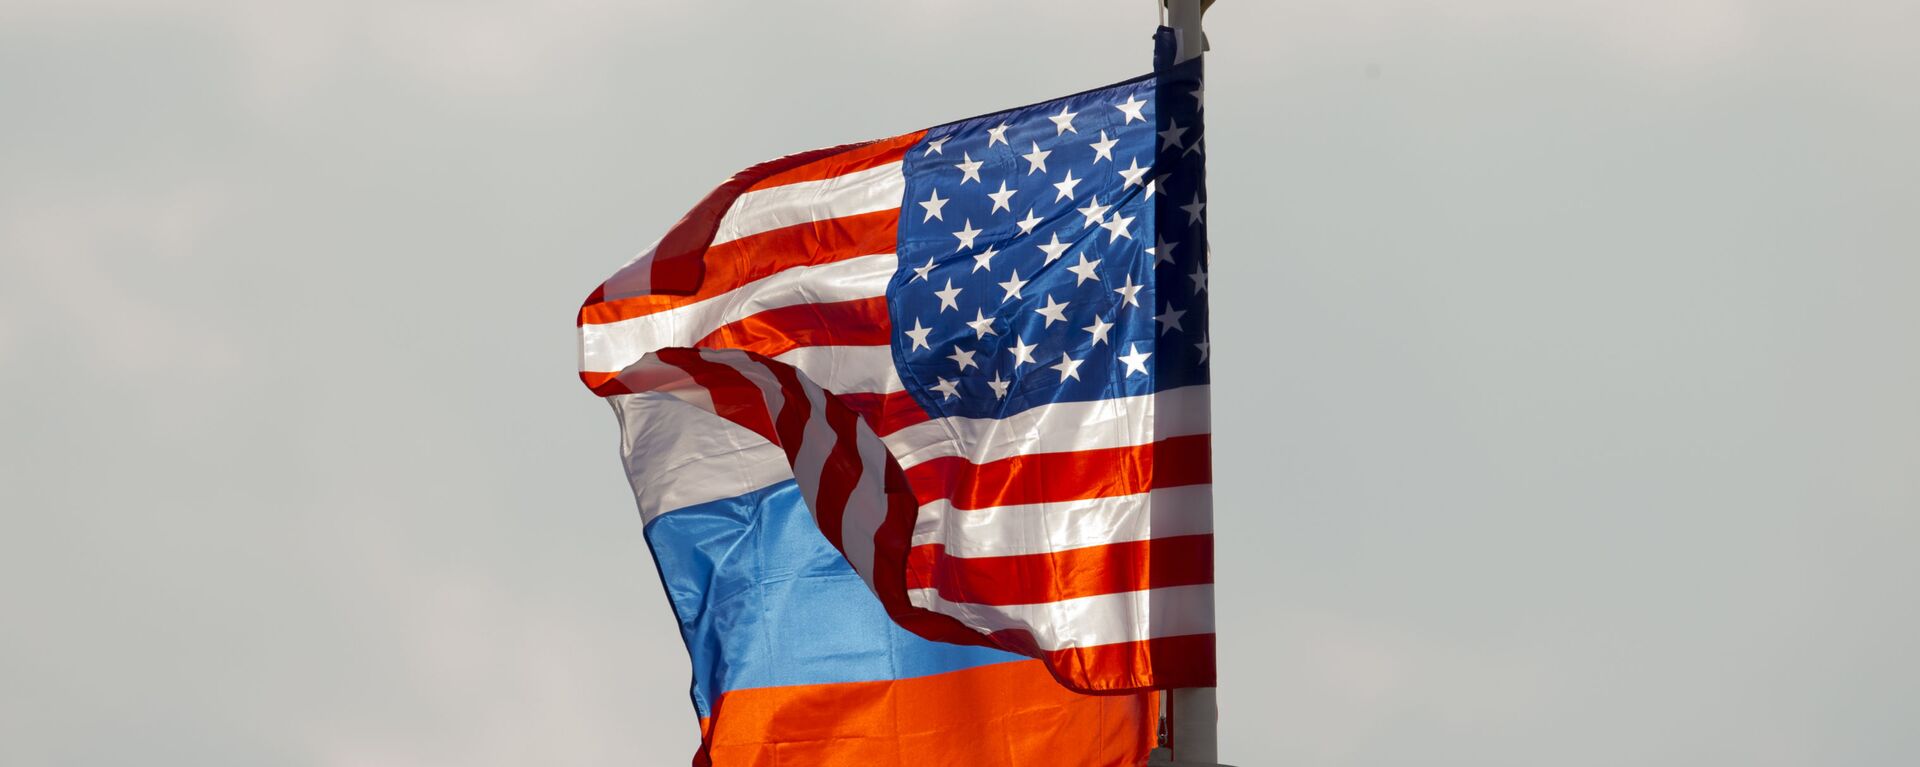 Флаги США и России, фото из архива - Sputnik Azərbaycan, 1920, 18.05.2021